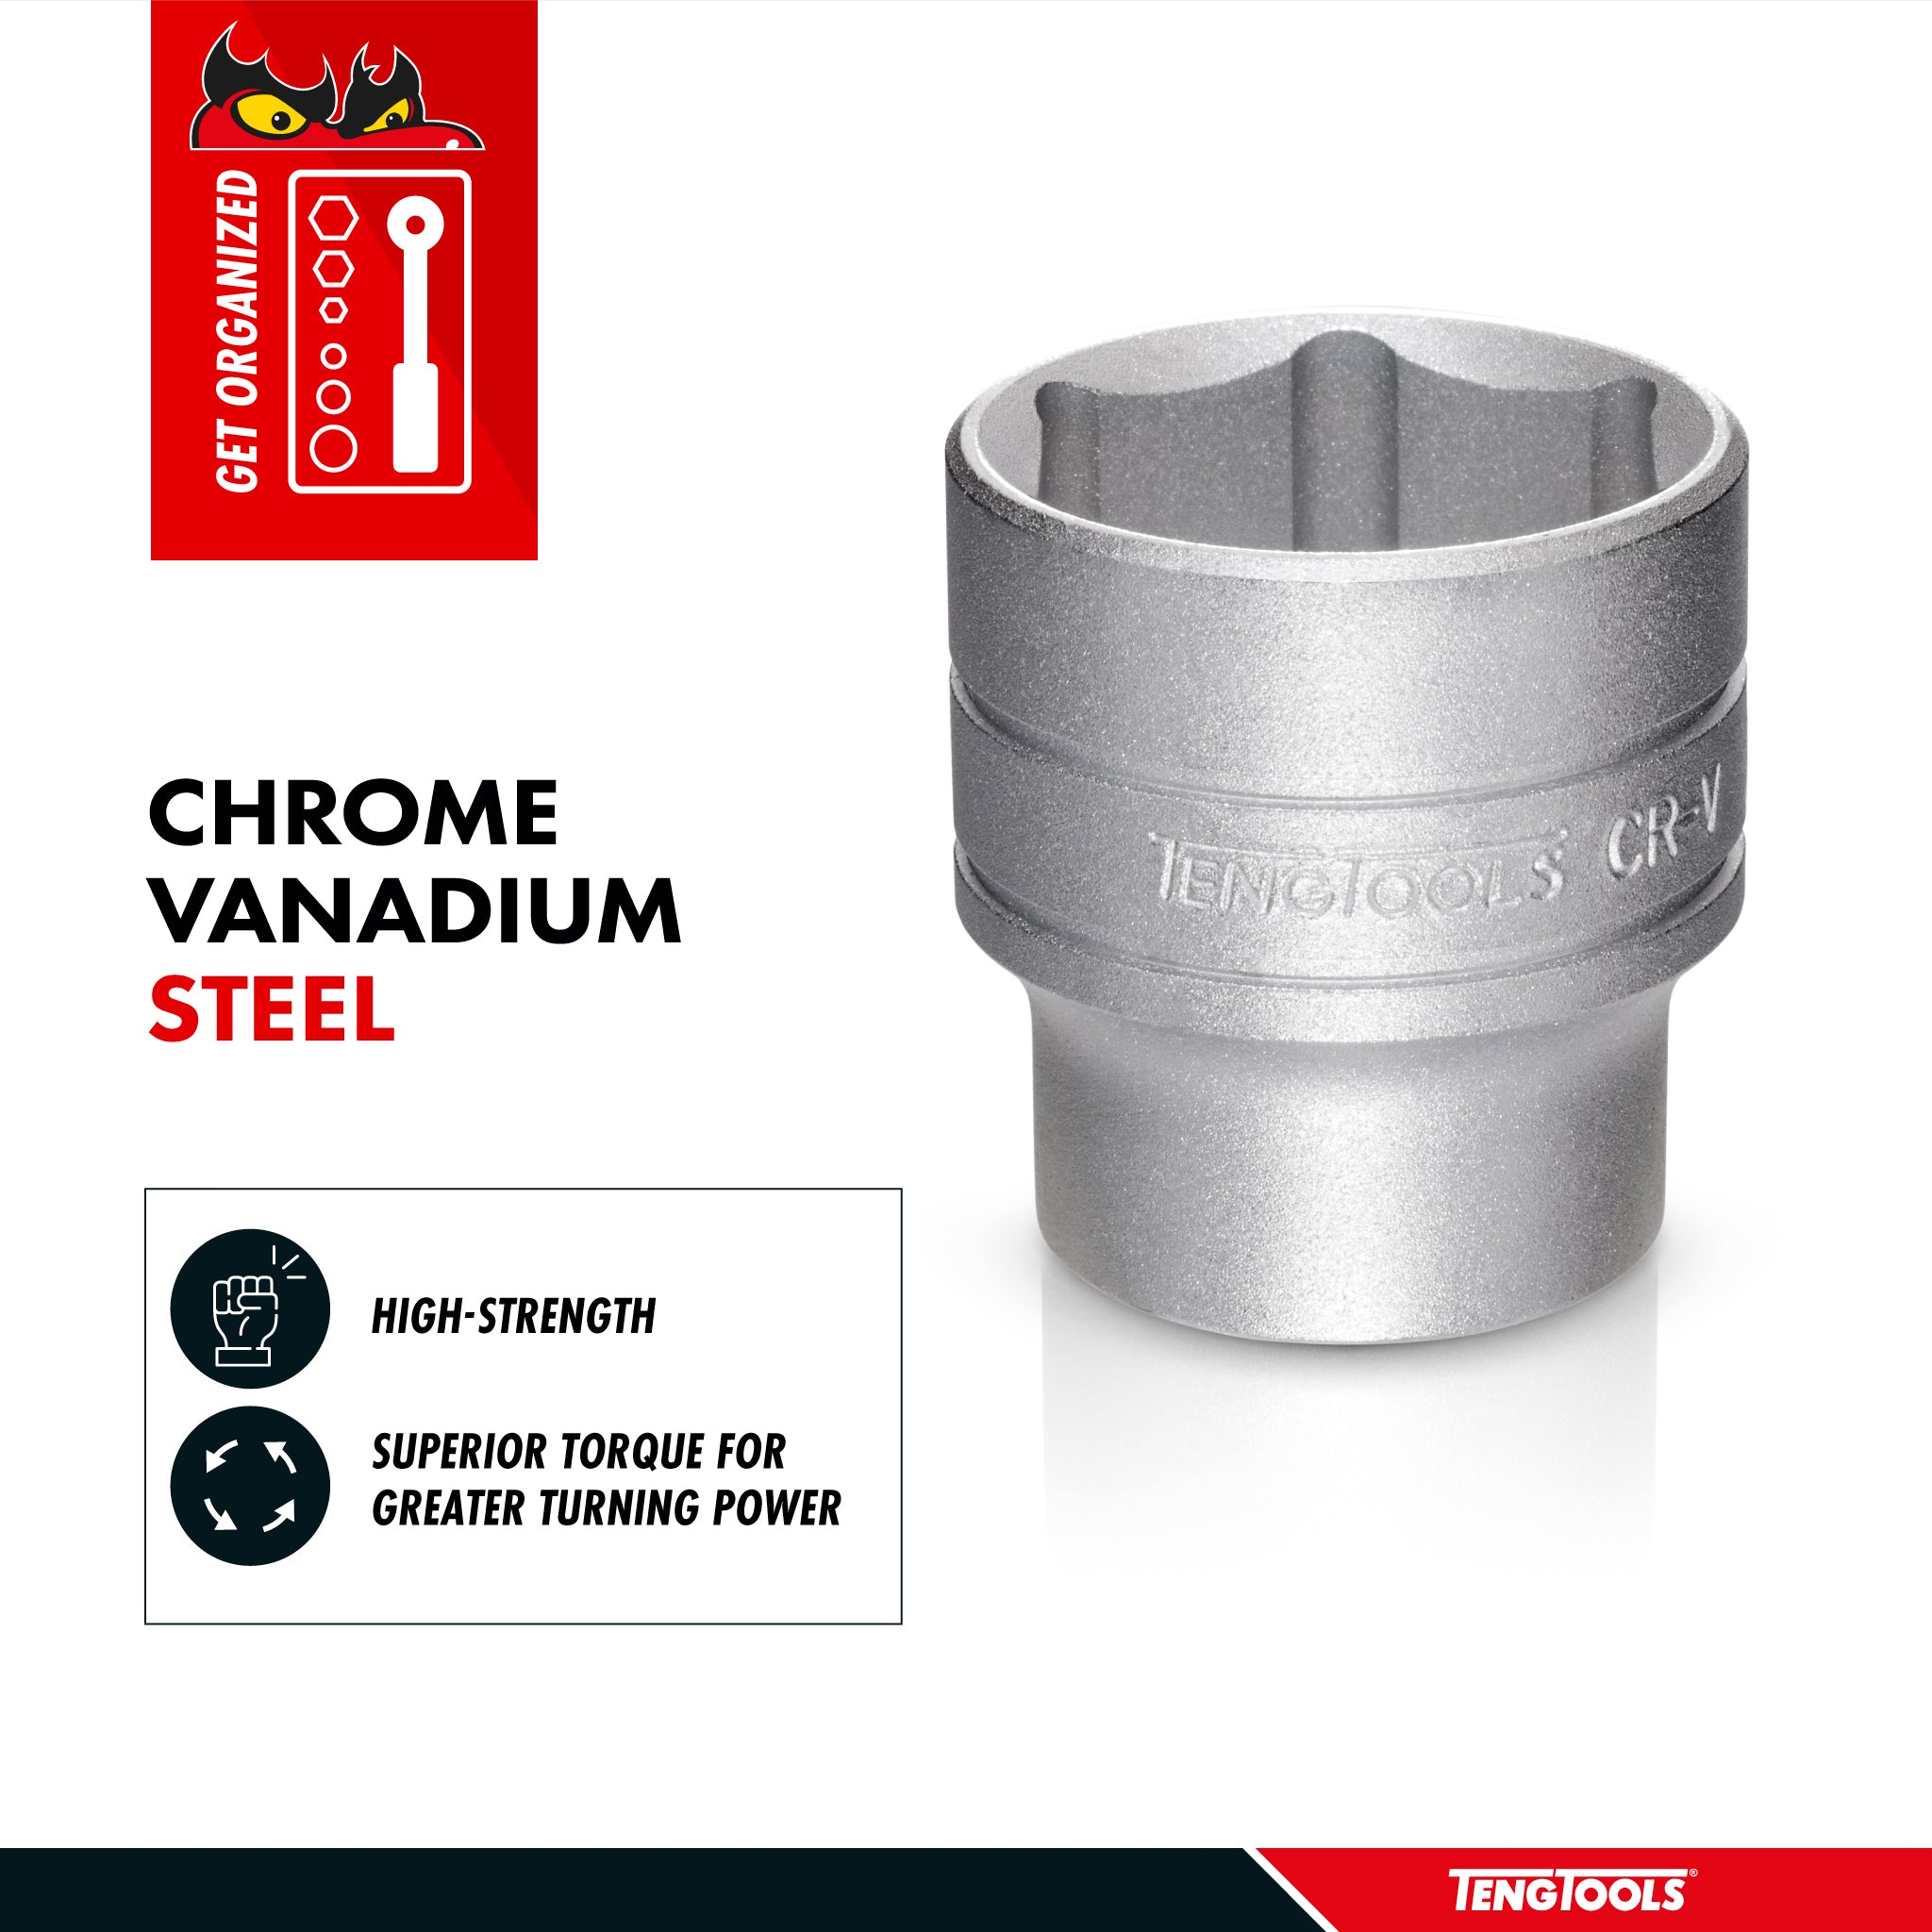 Teng Tools 1/2 Inch Drive 6 Point Metric Shallow Chrome Vanadium Sockets - 14mm